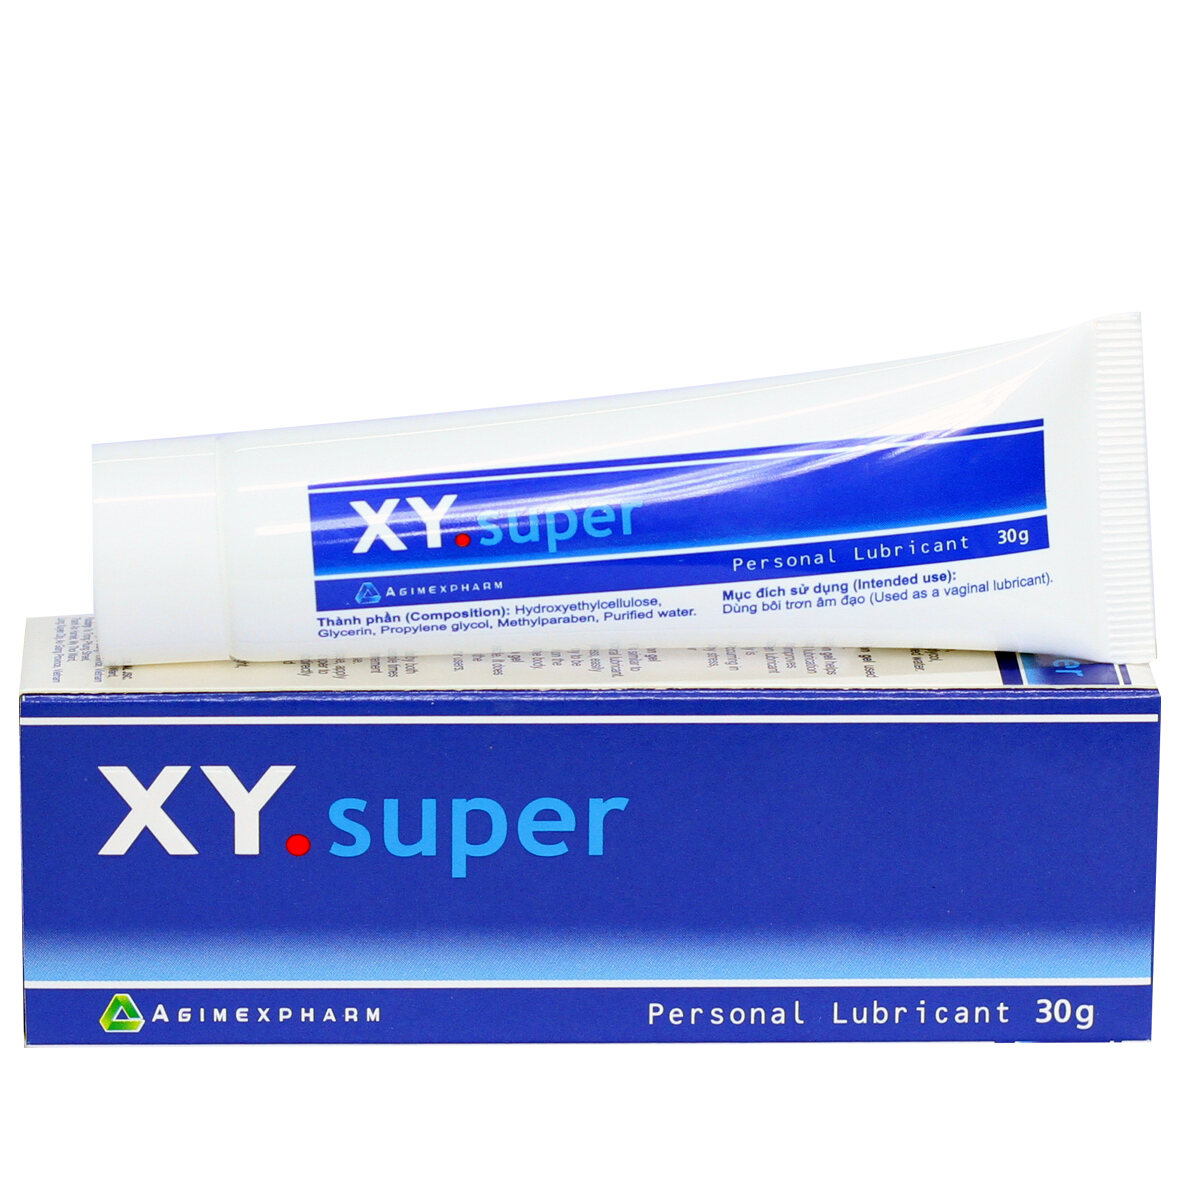 Gel bôi trơn - Super XY type 30g